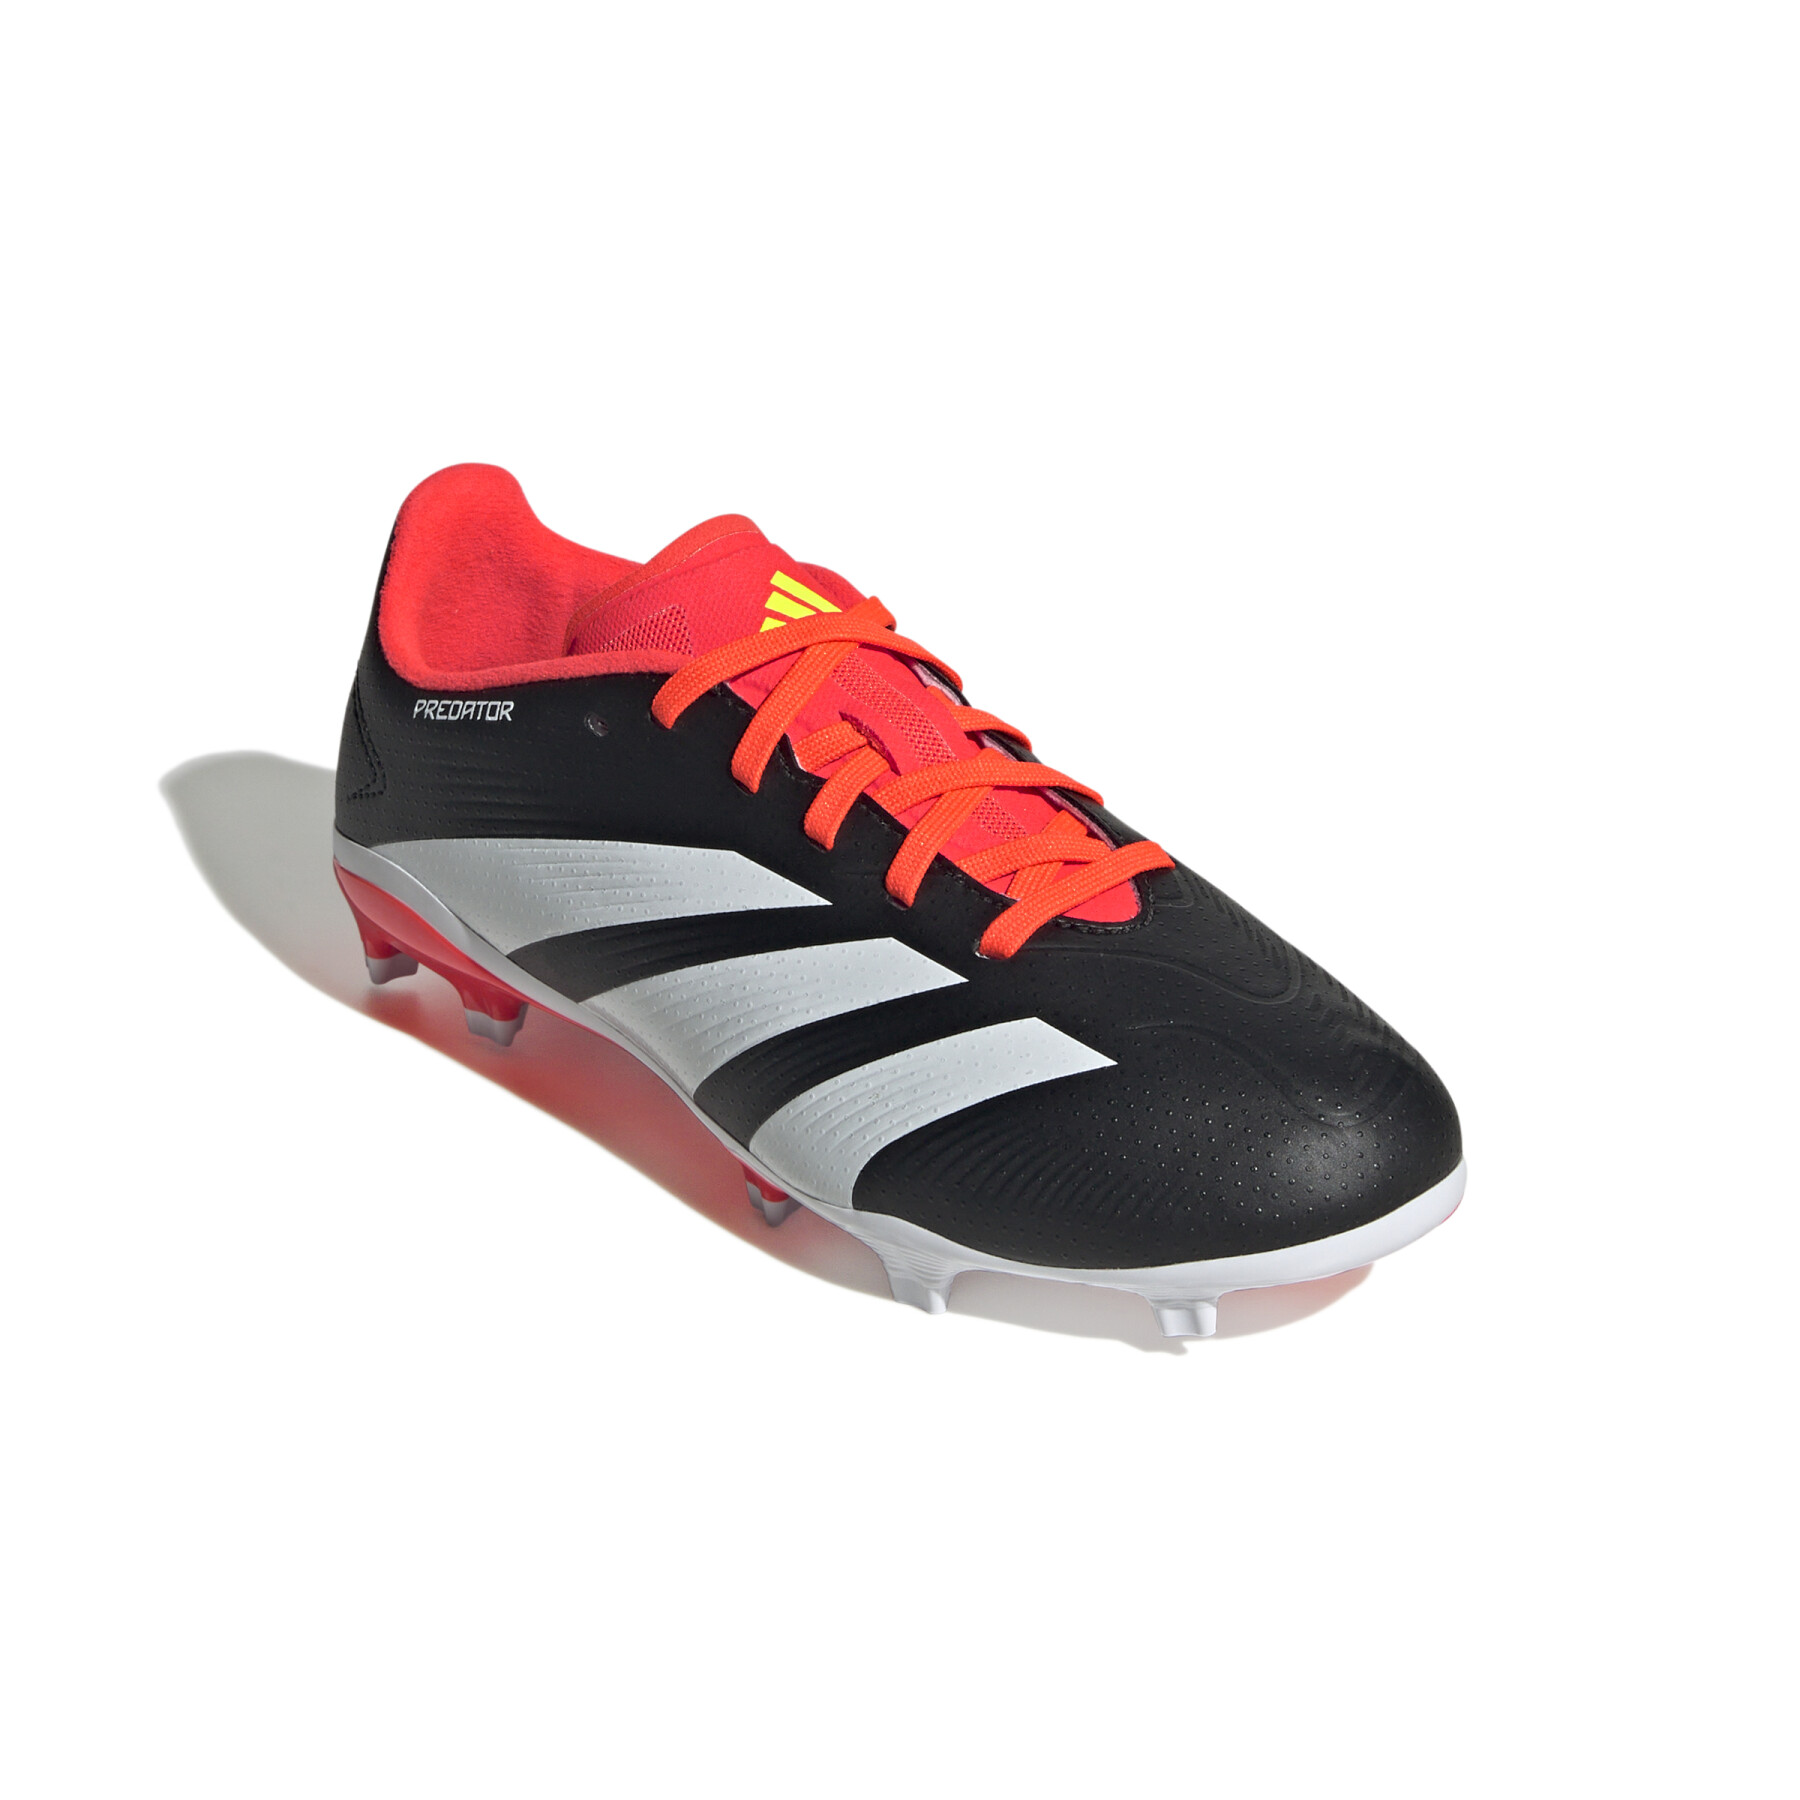 Children's soccer shoes adidas Predator League FG